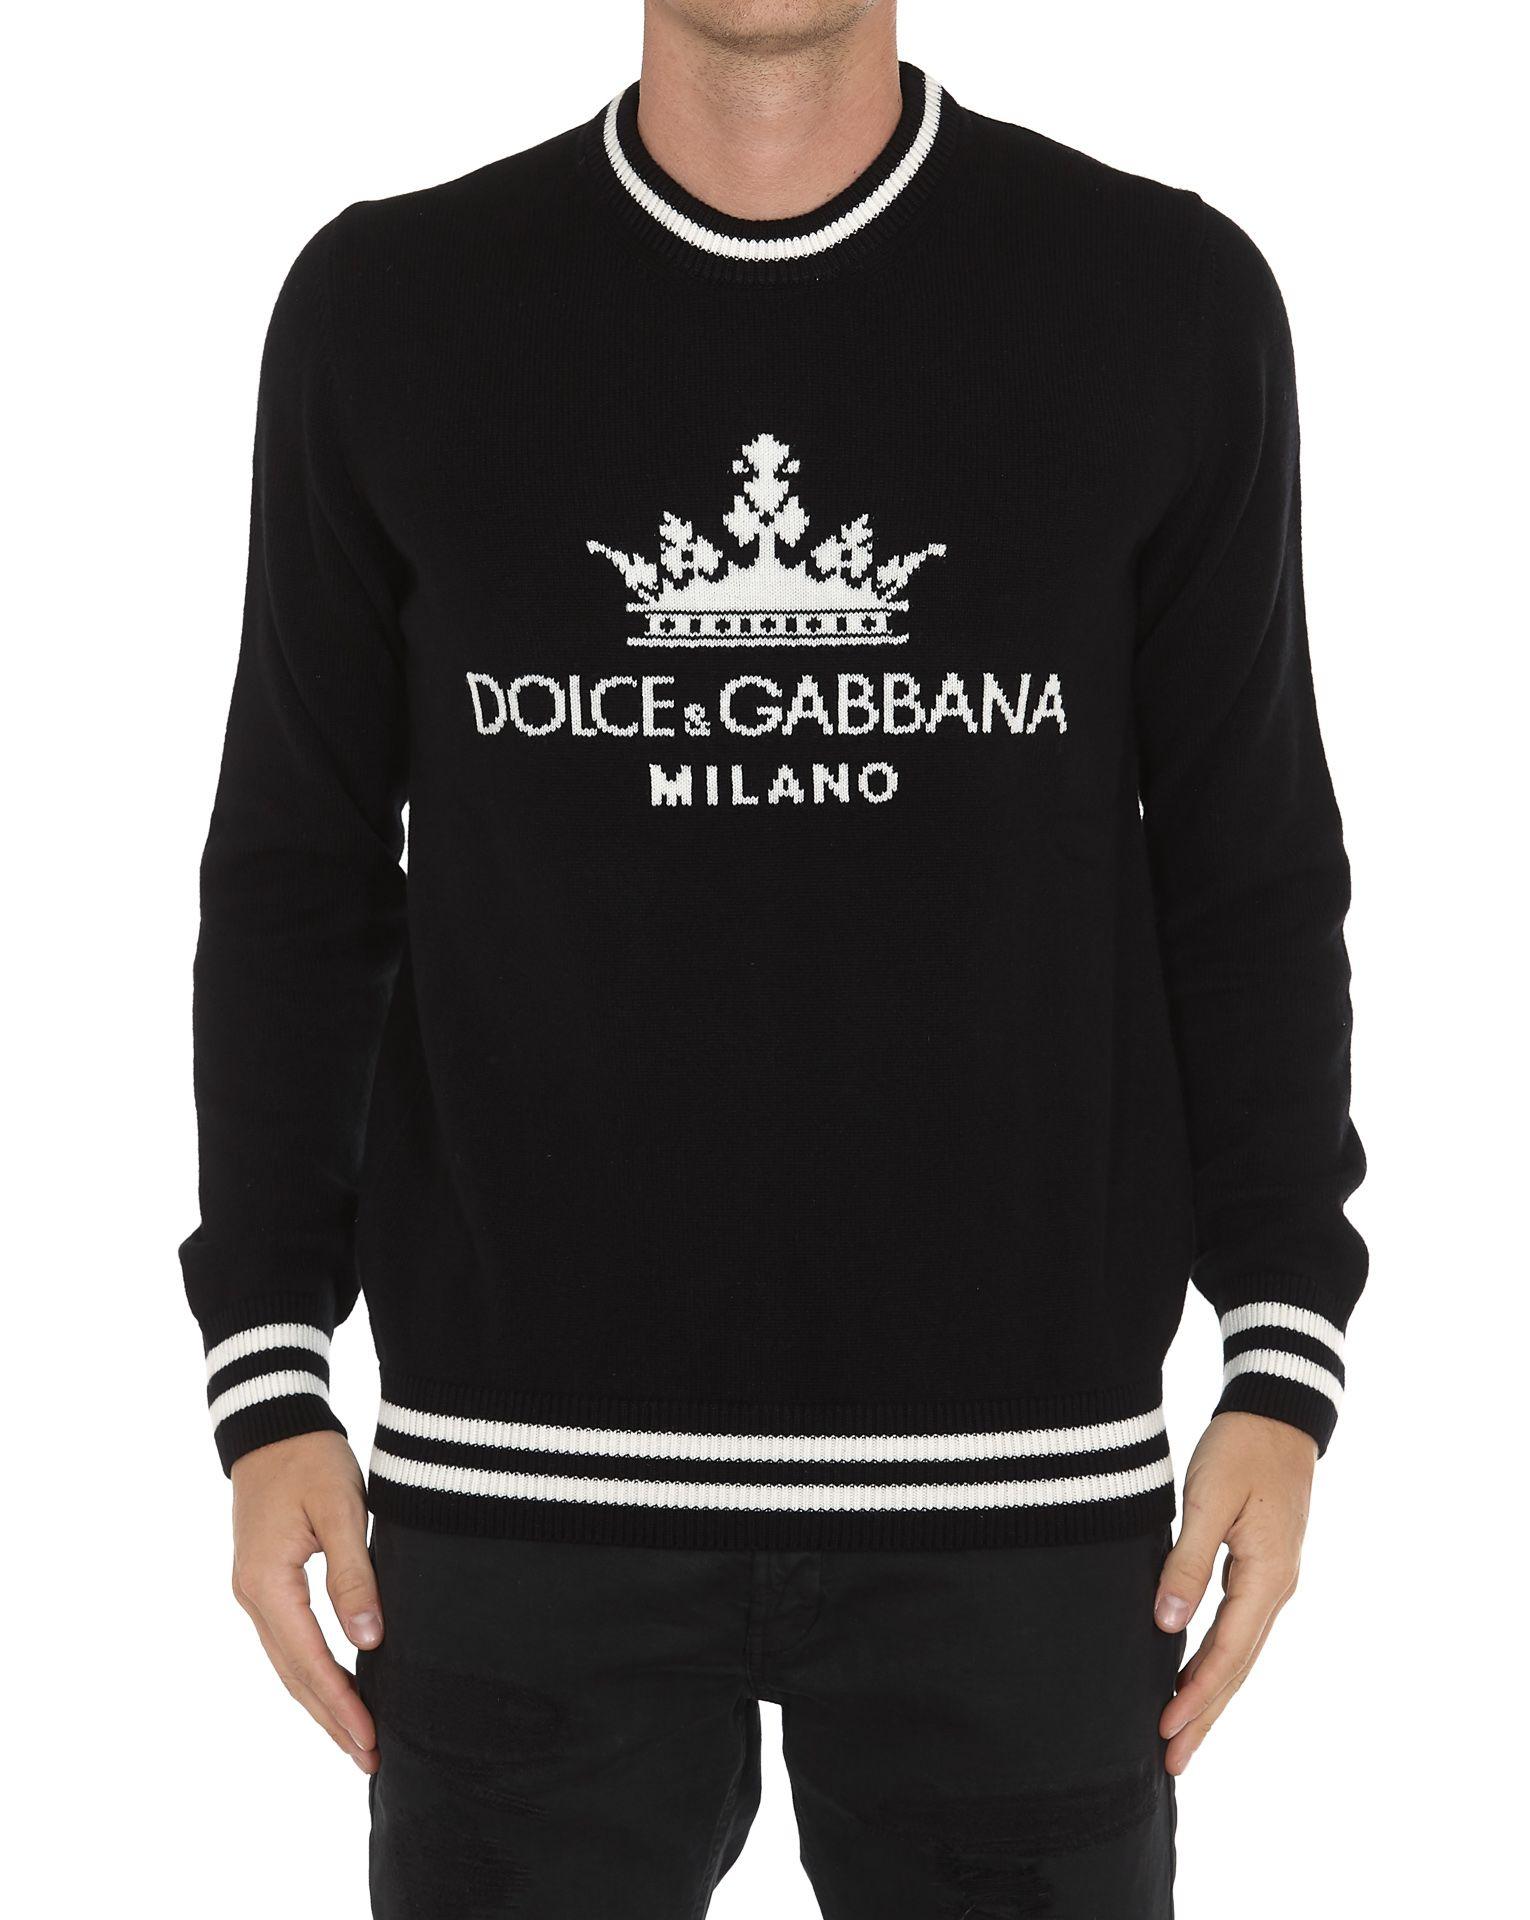 dolce and gabbana milano logo crew sweatshirt,yasserchemicals.com